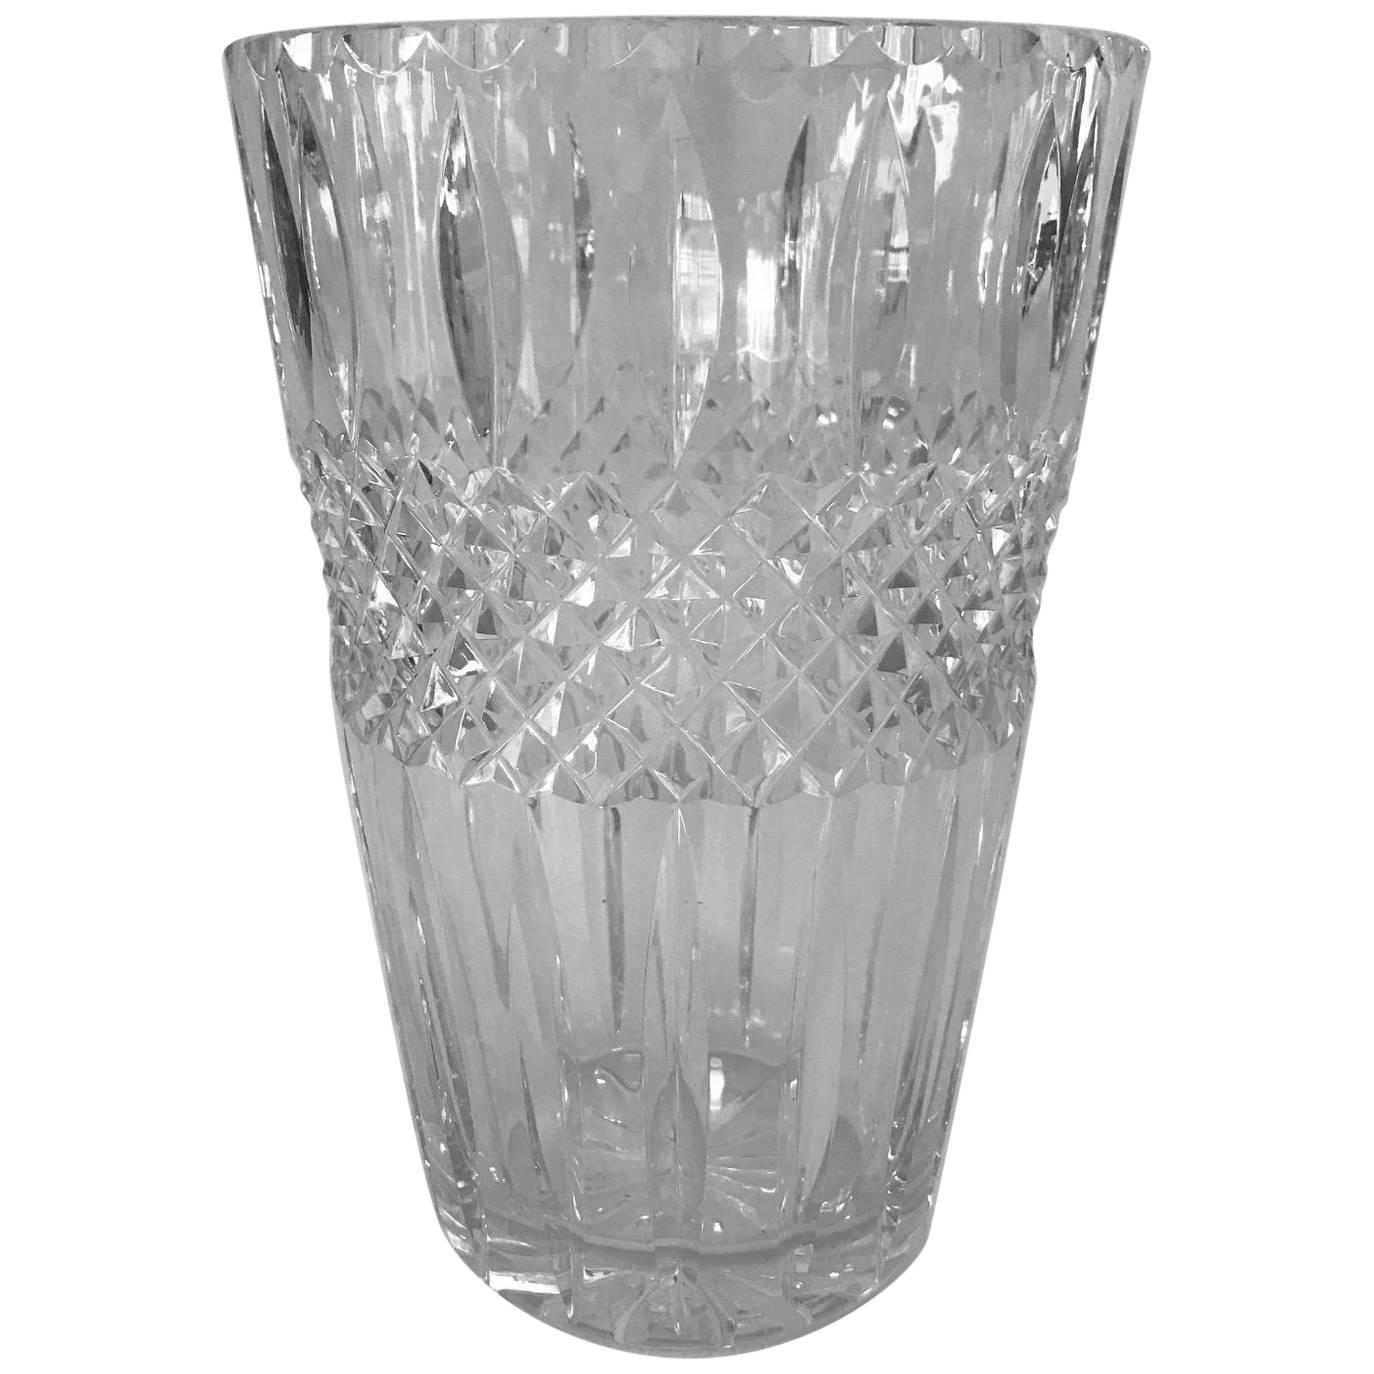 1930s Cut Cross Hatched Crystal Vase